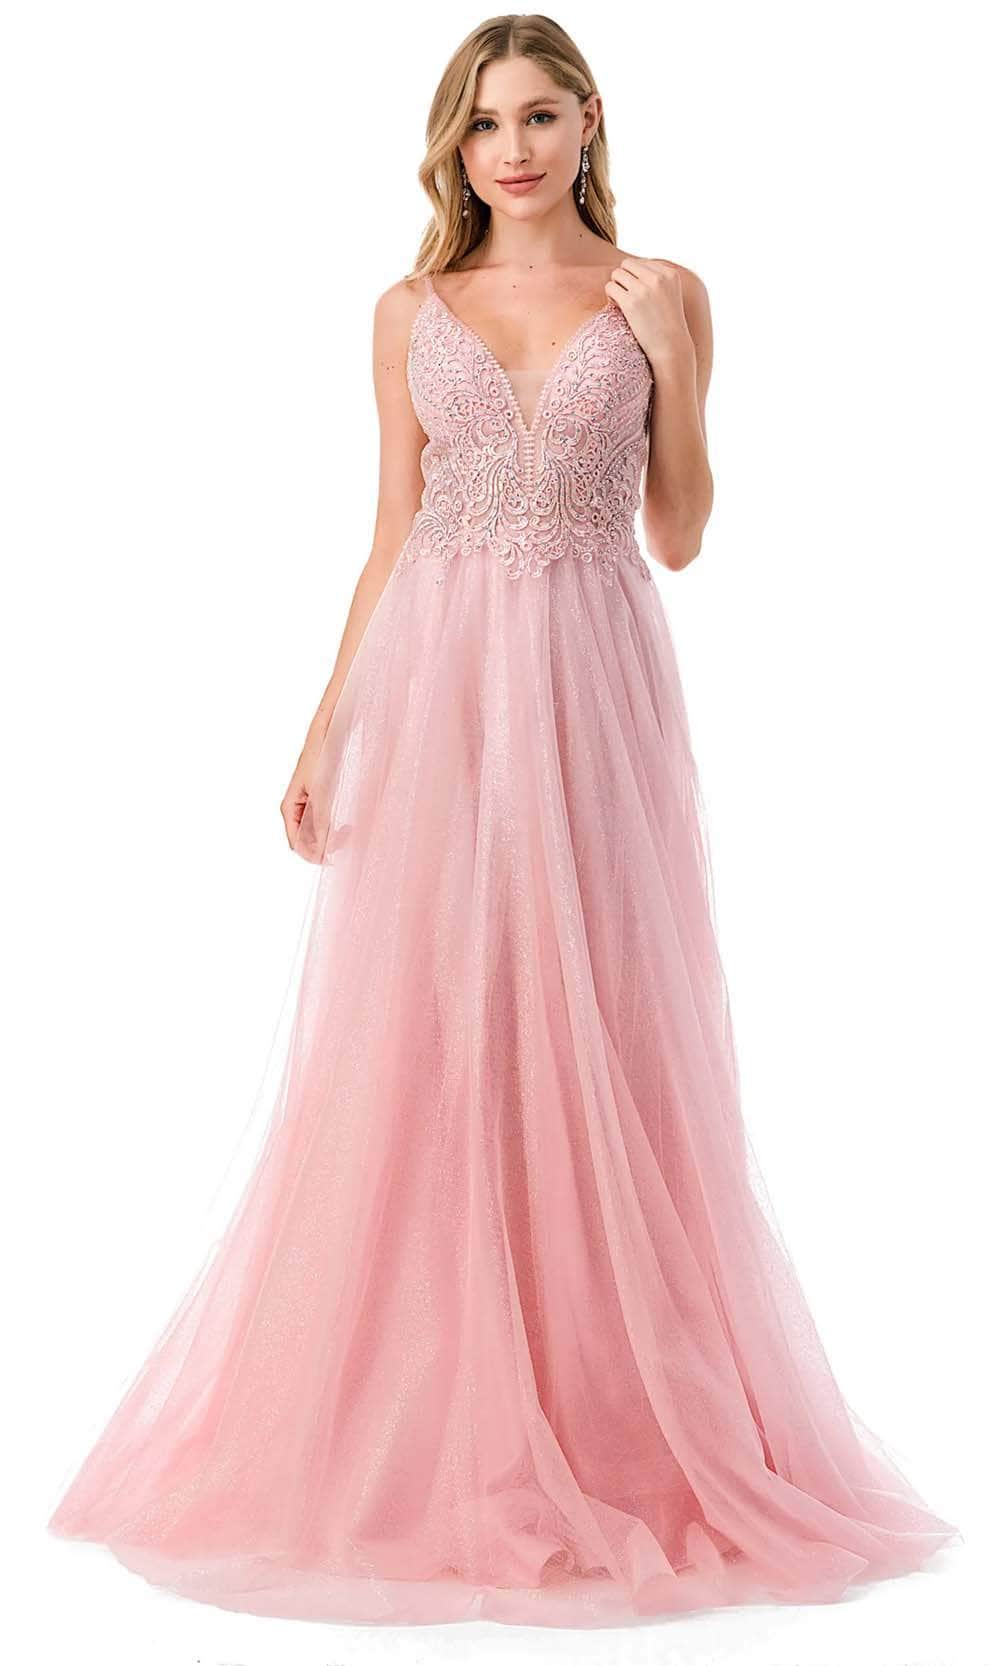 Image of Aspeed Design L2688 - Shimmer Tulle Prom Dress